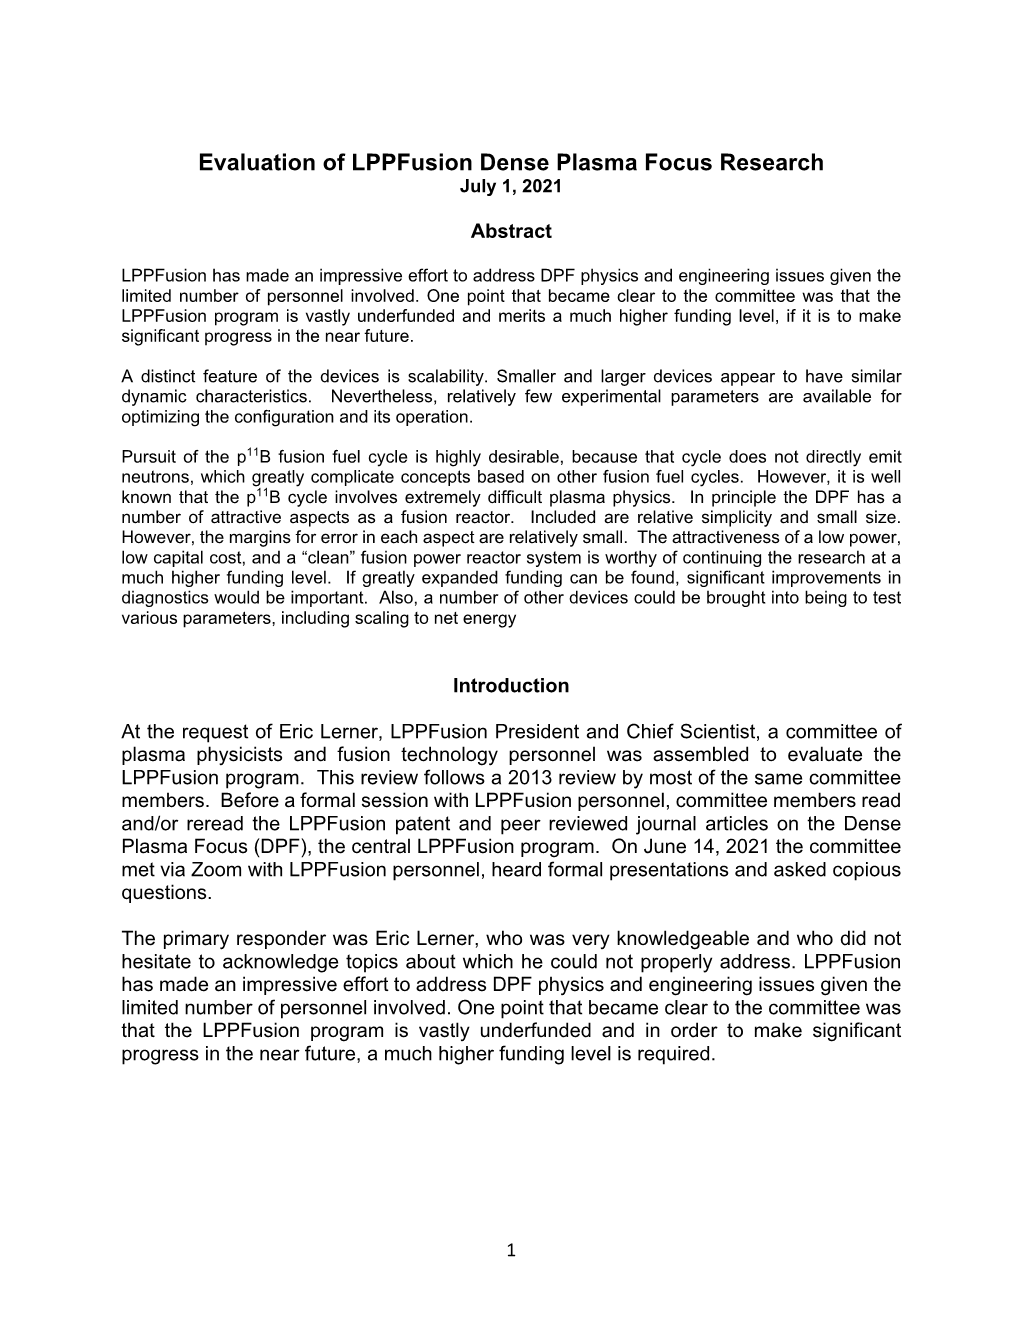 Evaluation of Lppfusion Dense Plasma Focus Research July 1, 2021